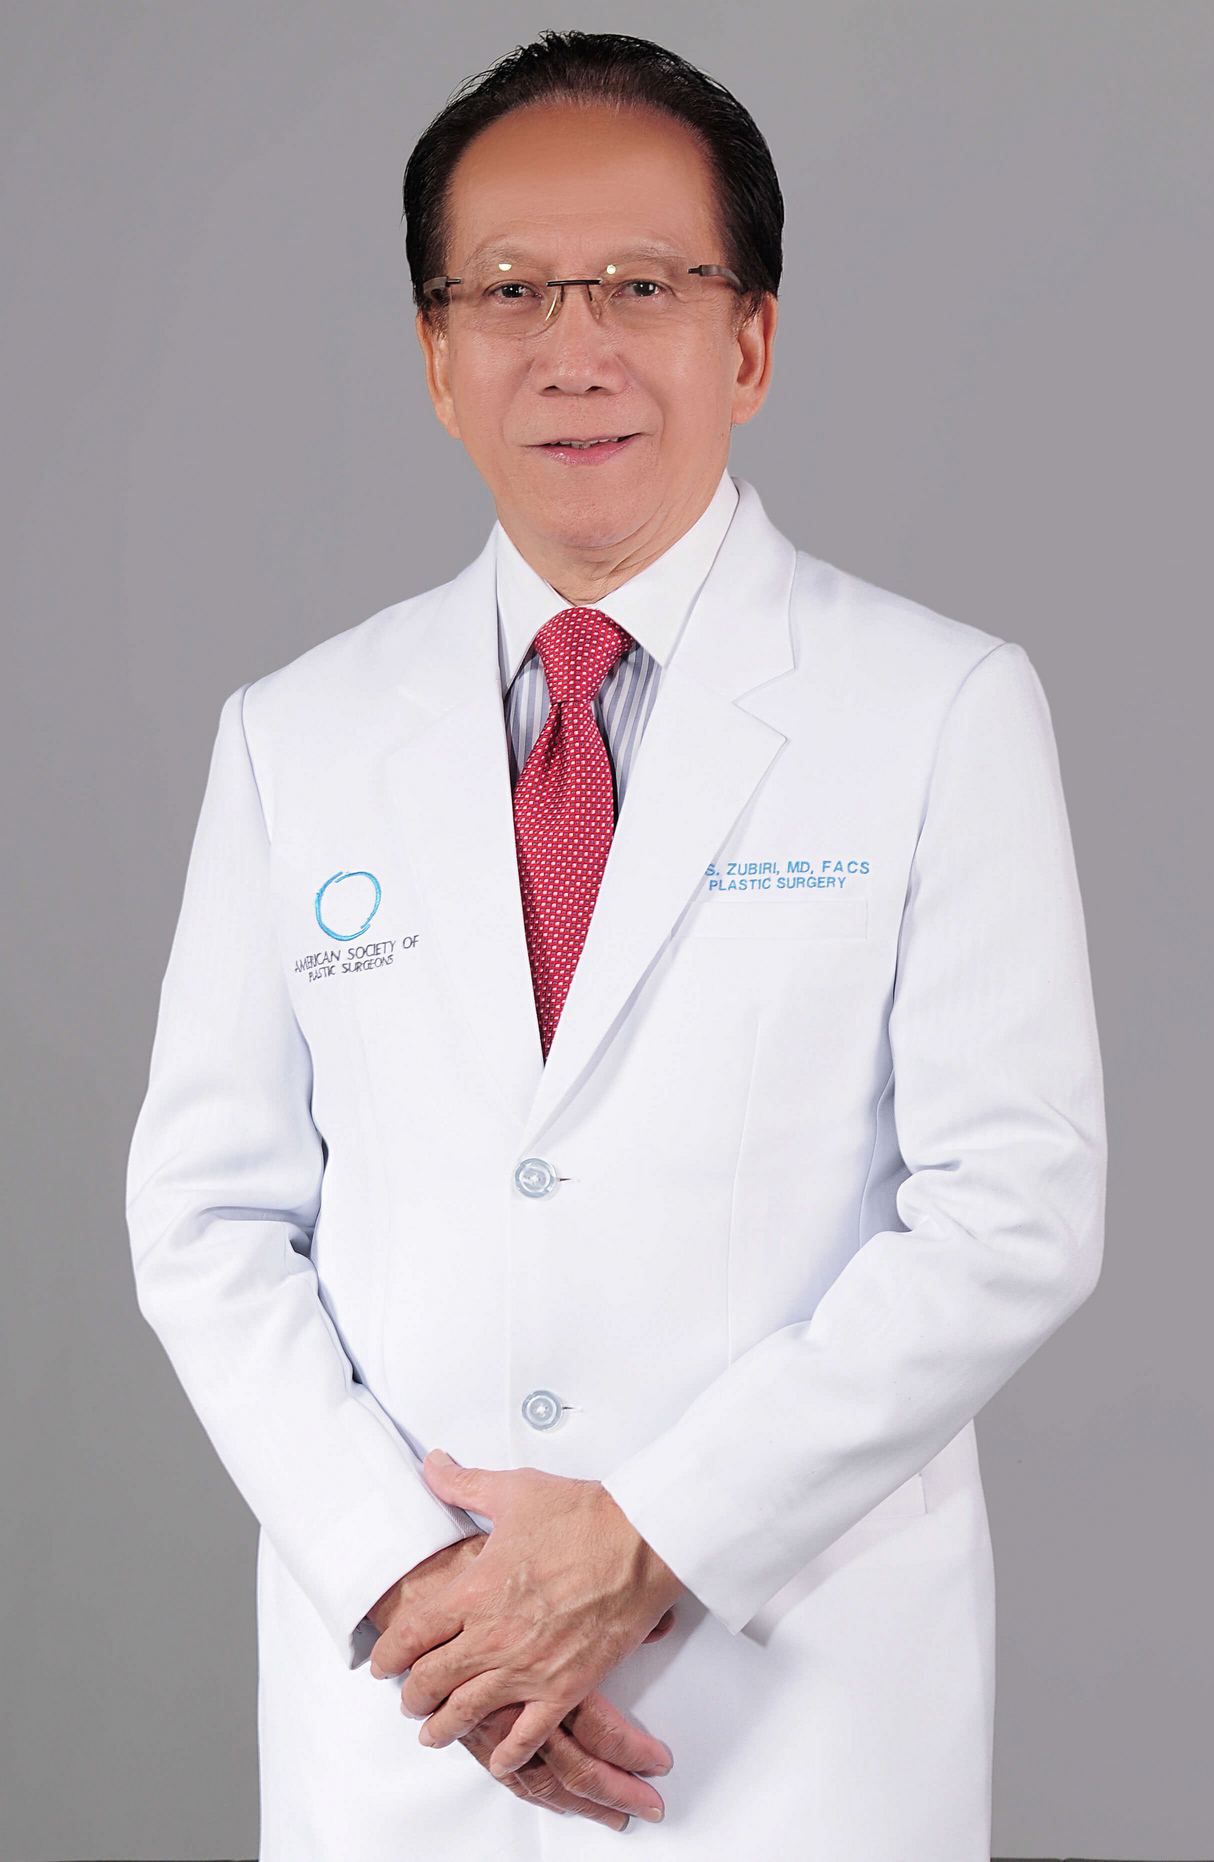 Dr. Zubiri, Plastic Surgeon in the Philippines